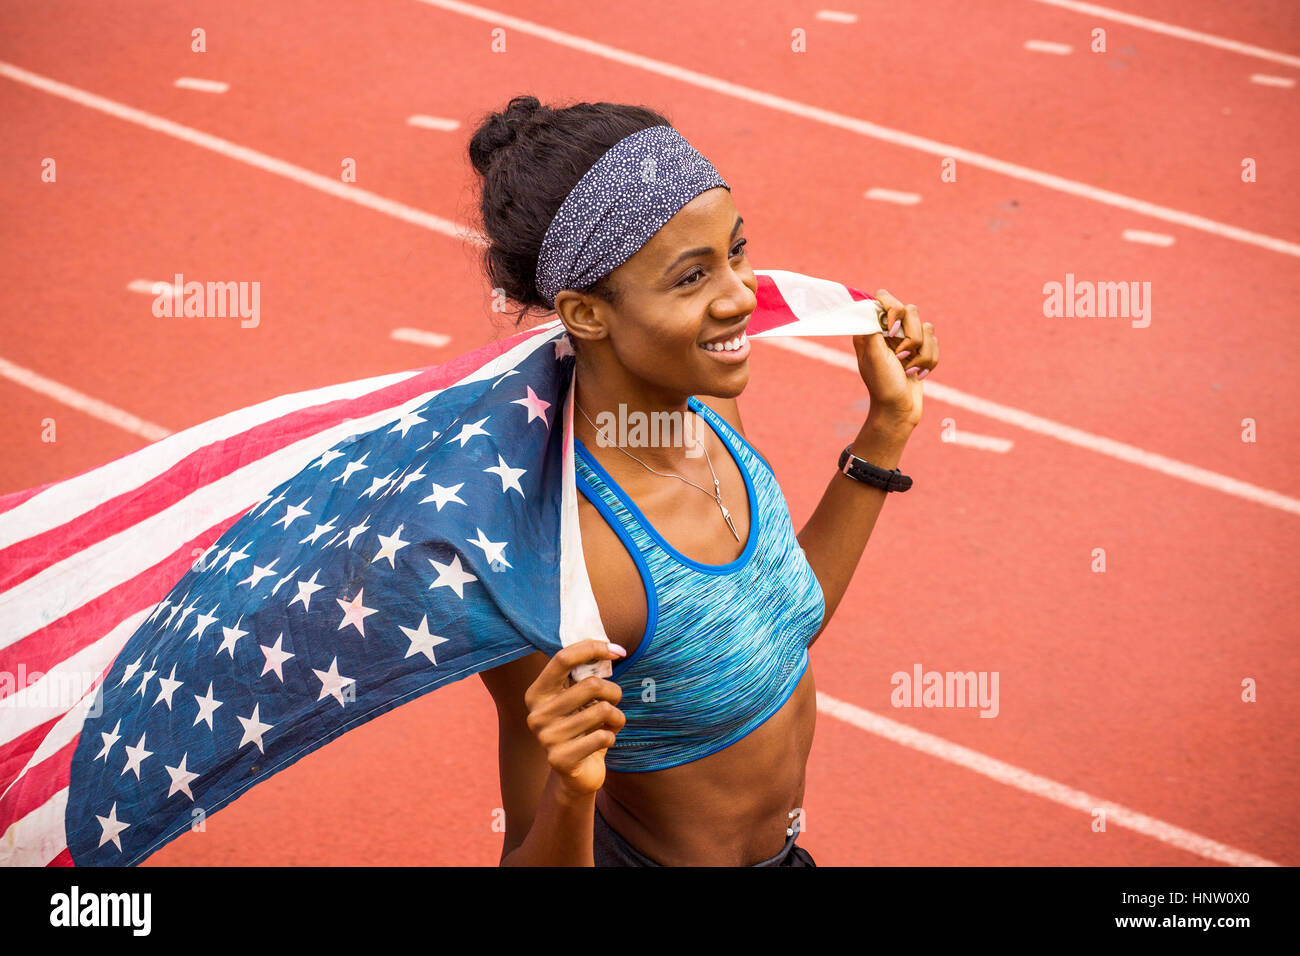 Smiling Black athlete holding American flag on track Stock Photo